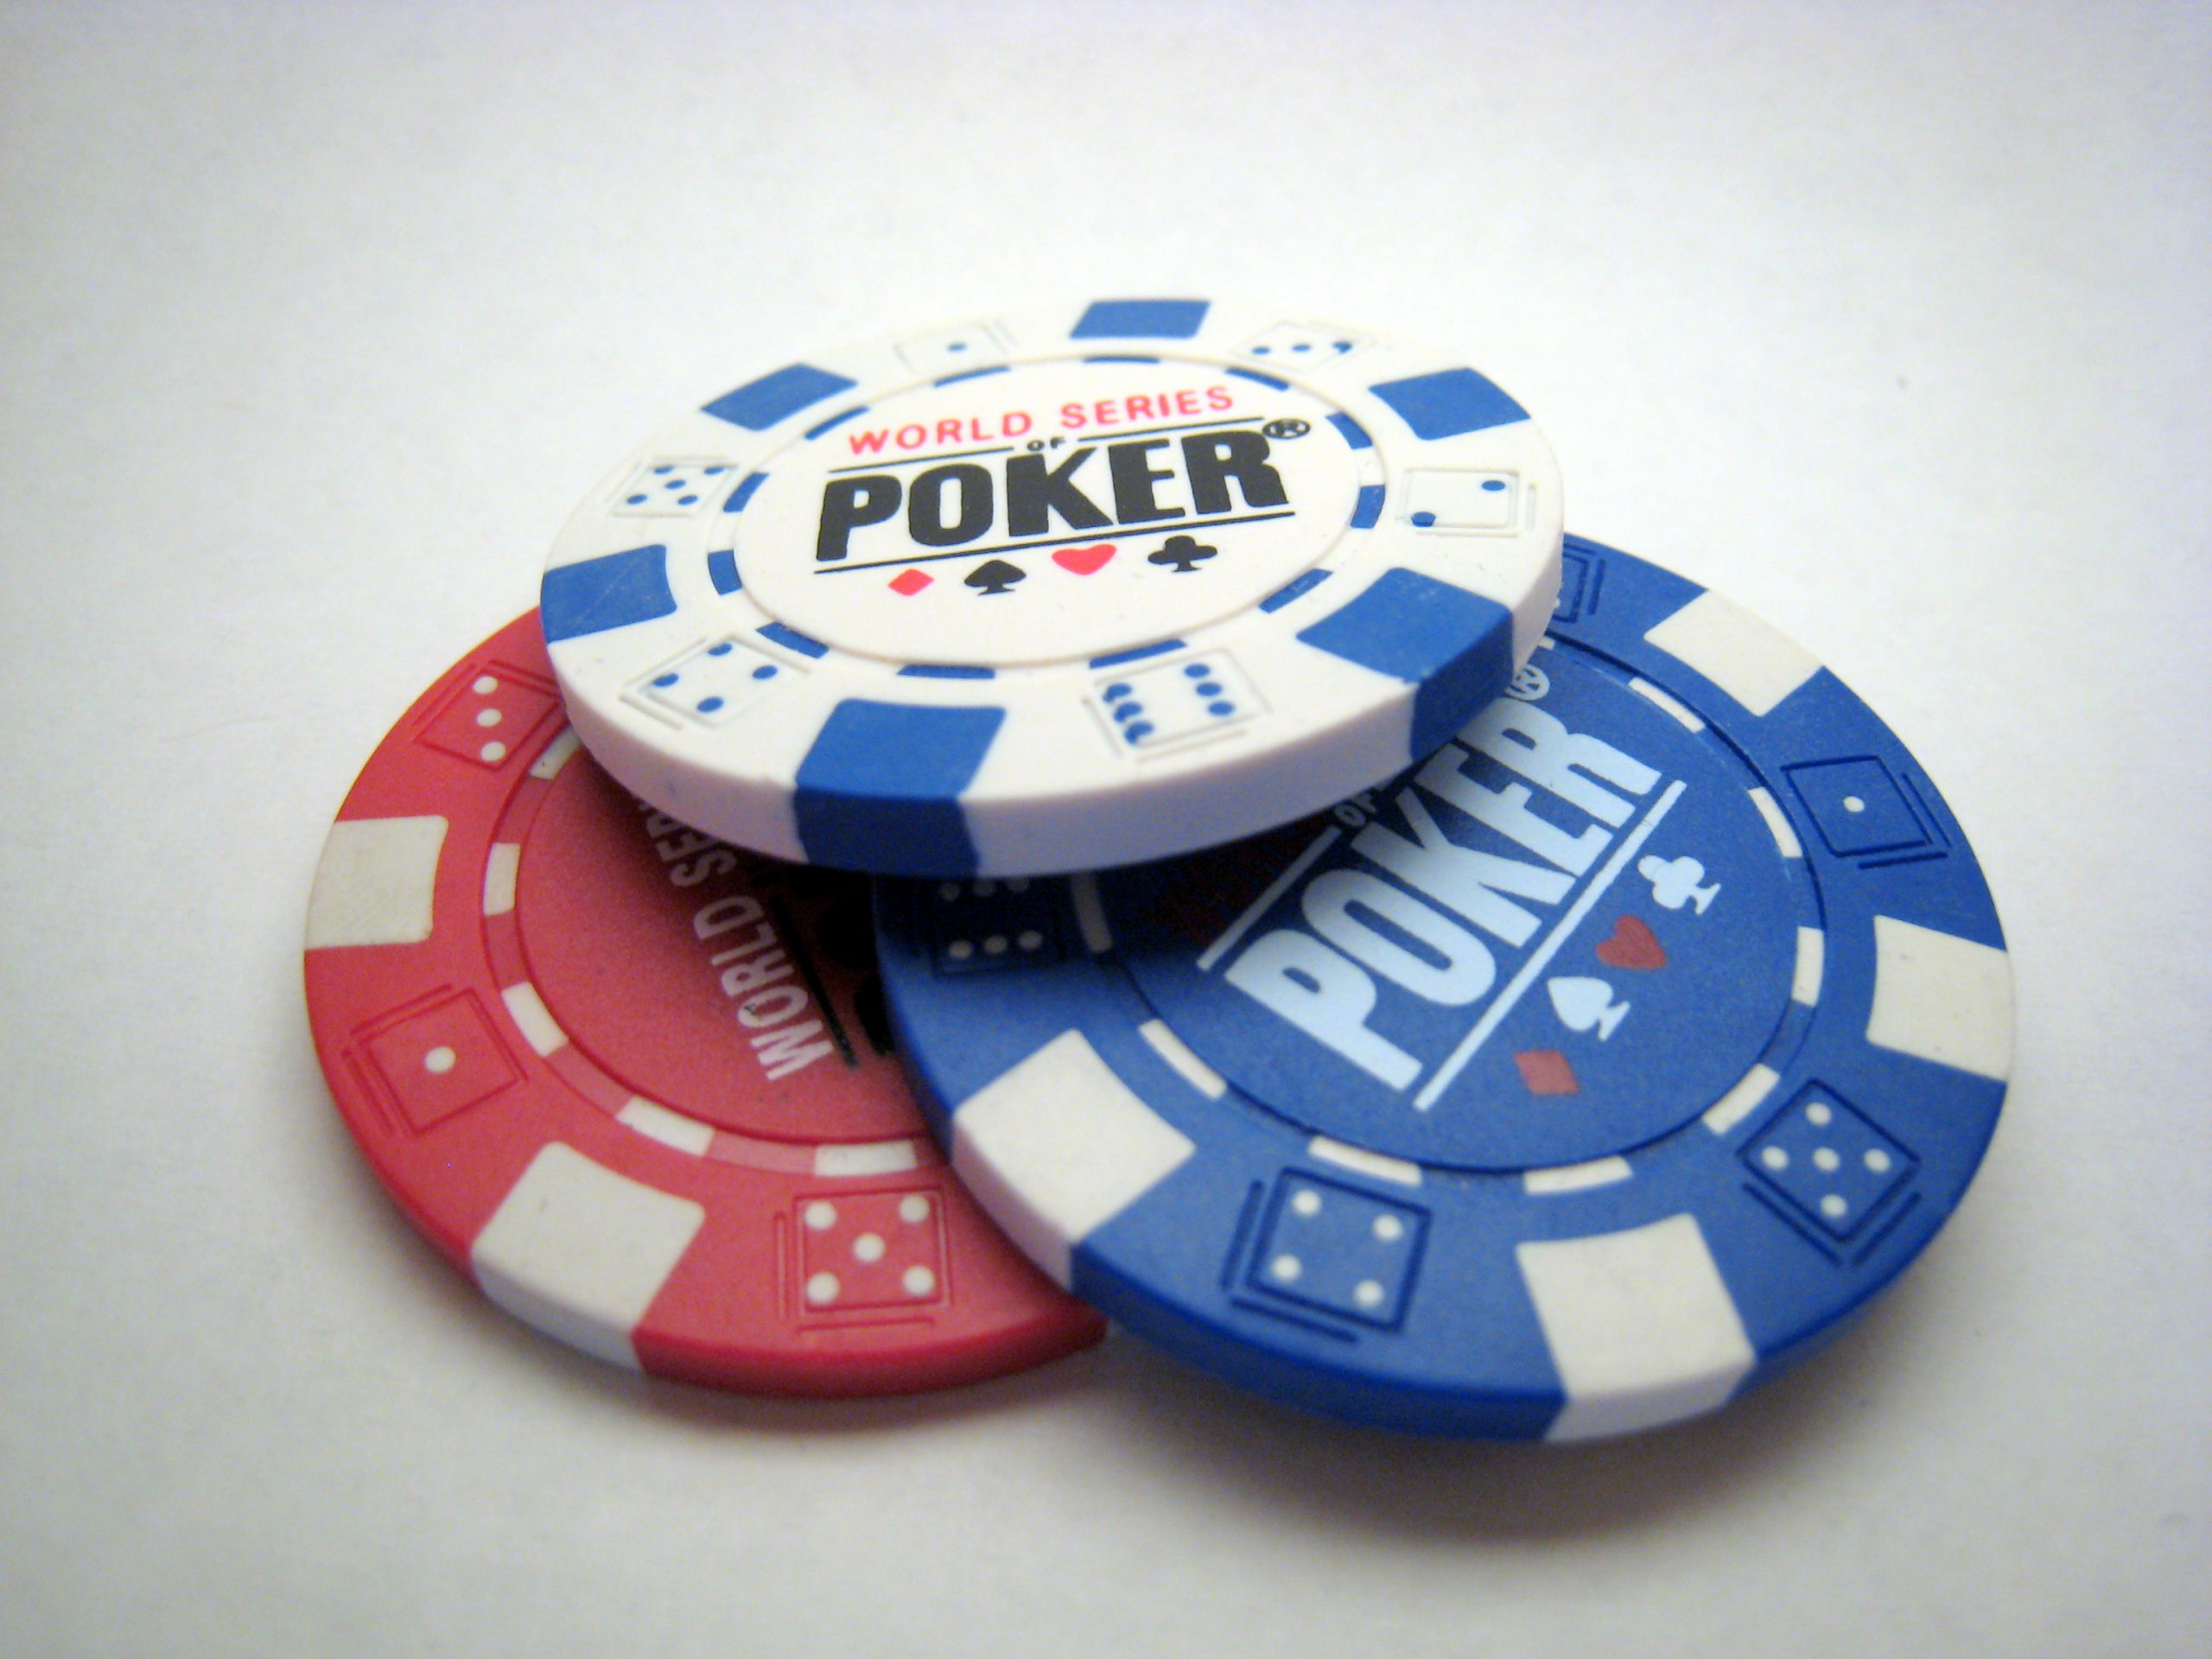 Poker Chips|Manig Loeser||Pokertisch